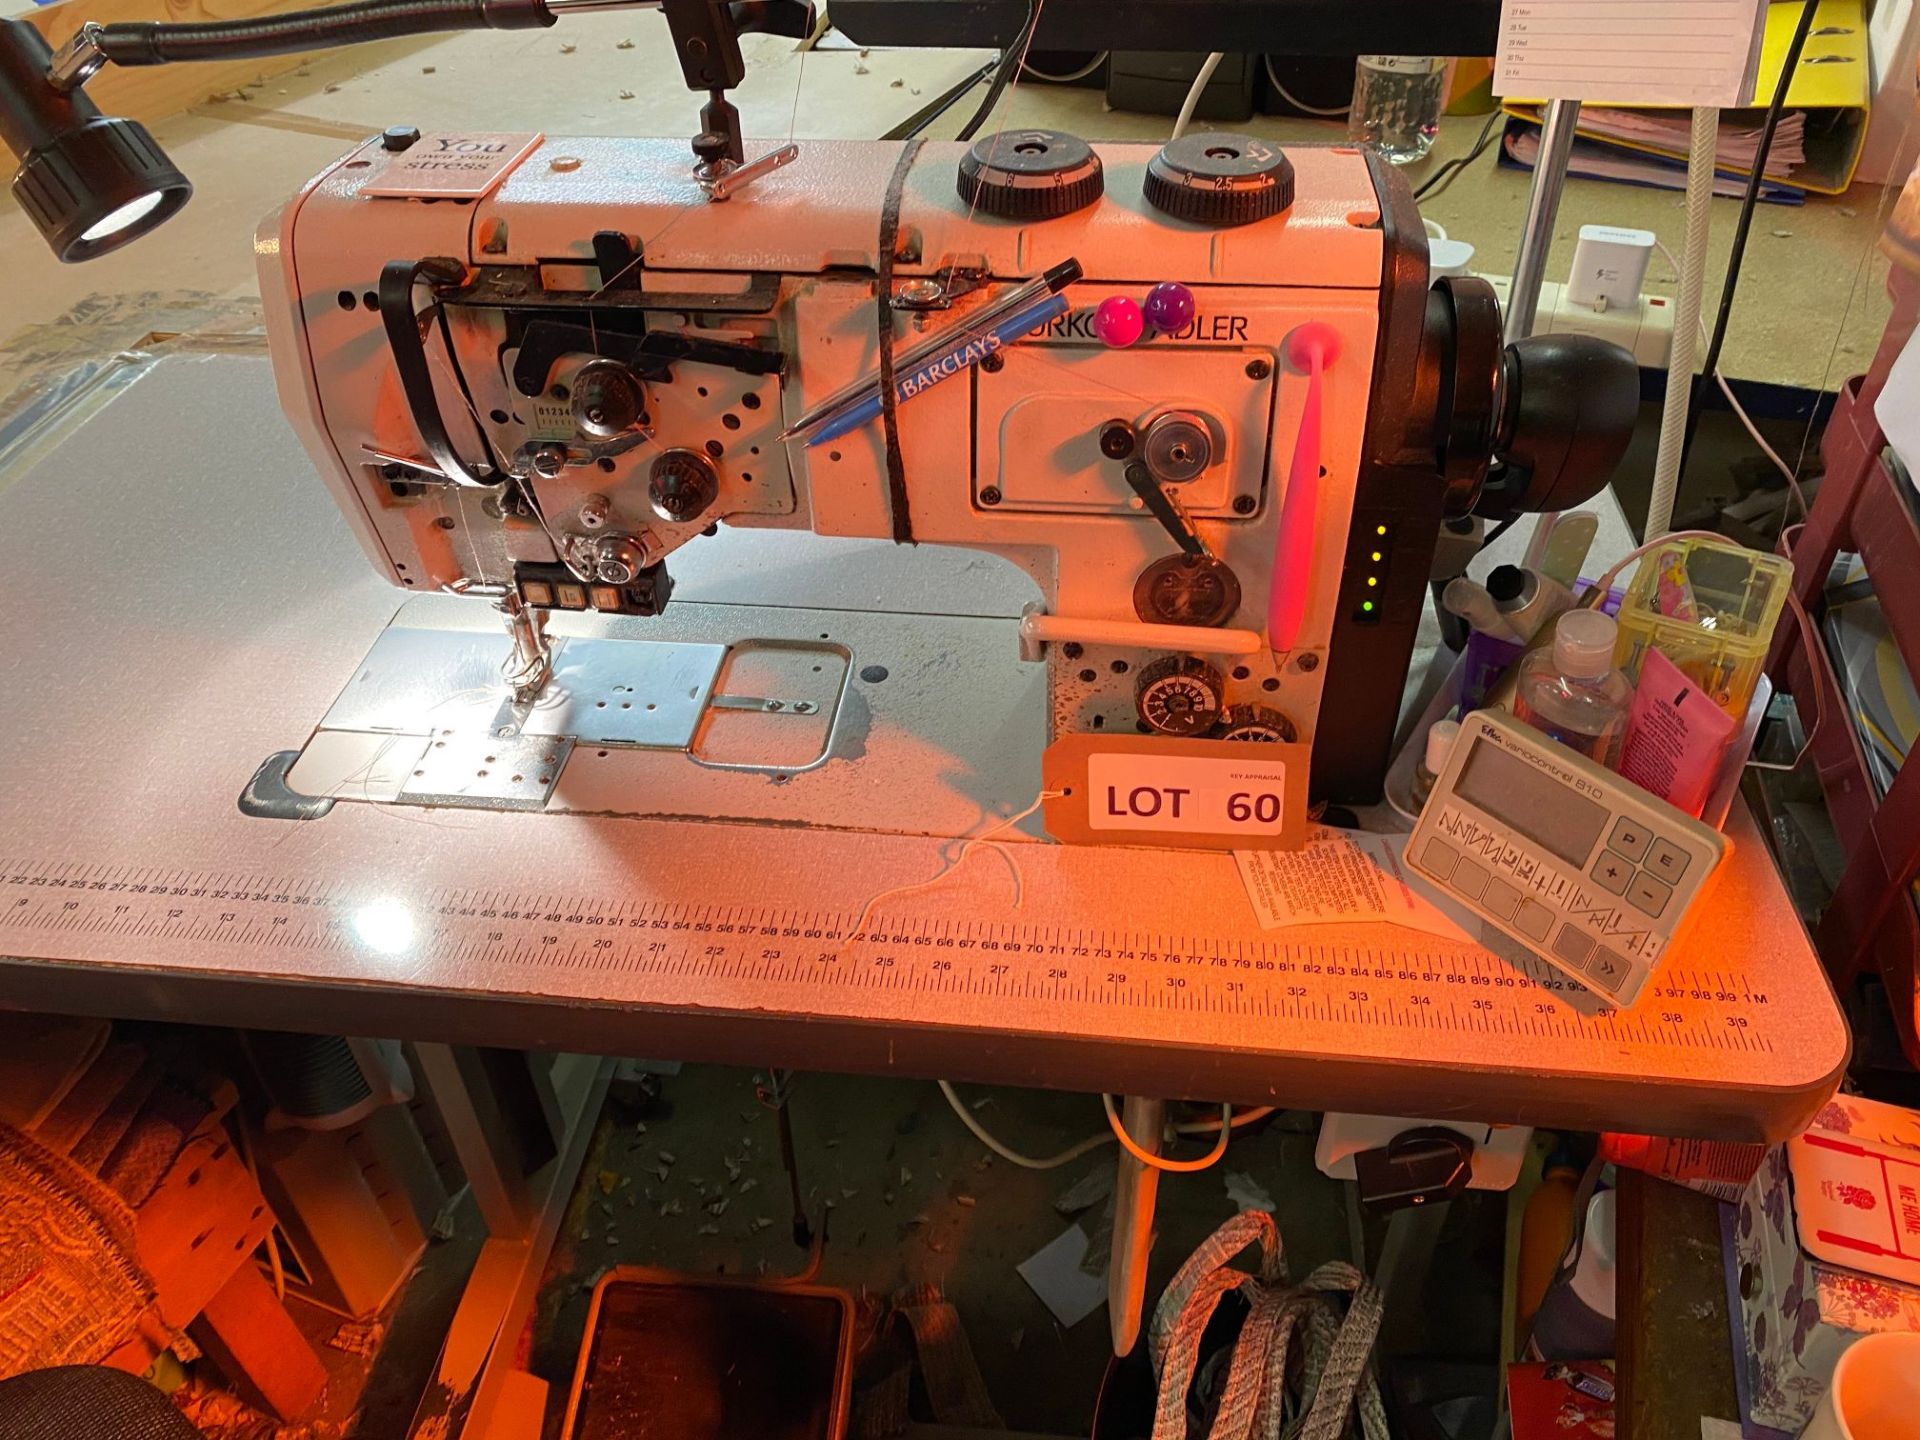 Durkopp Adler N291-185182 industrial sewing machine with 1m table, two thread feed, Efka